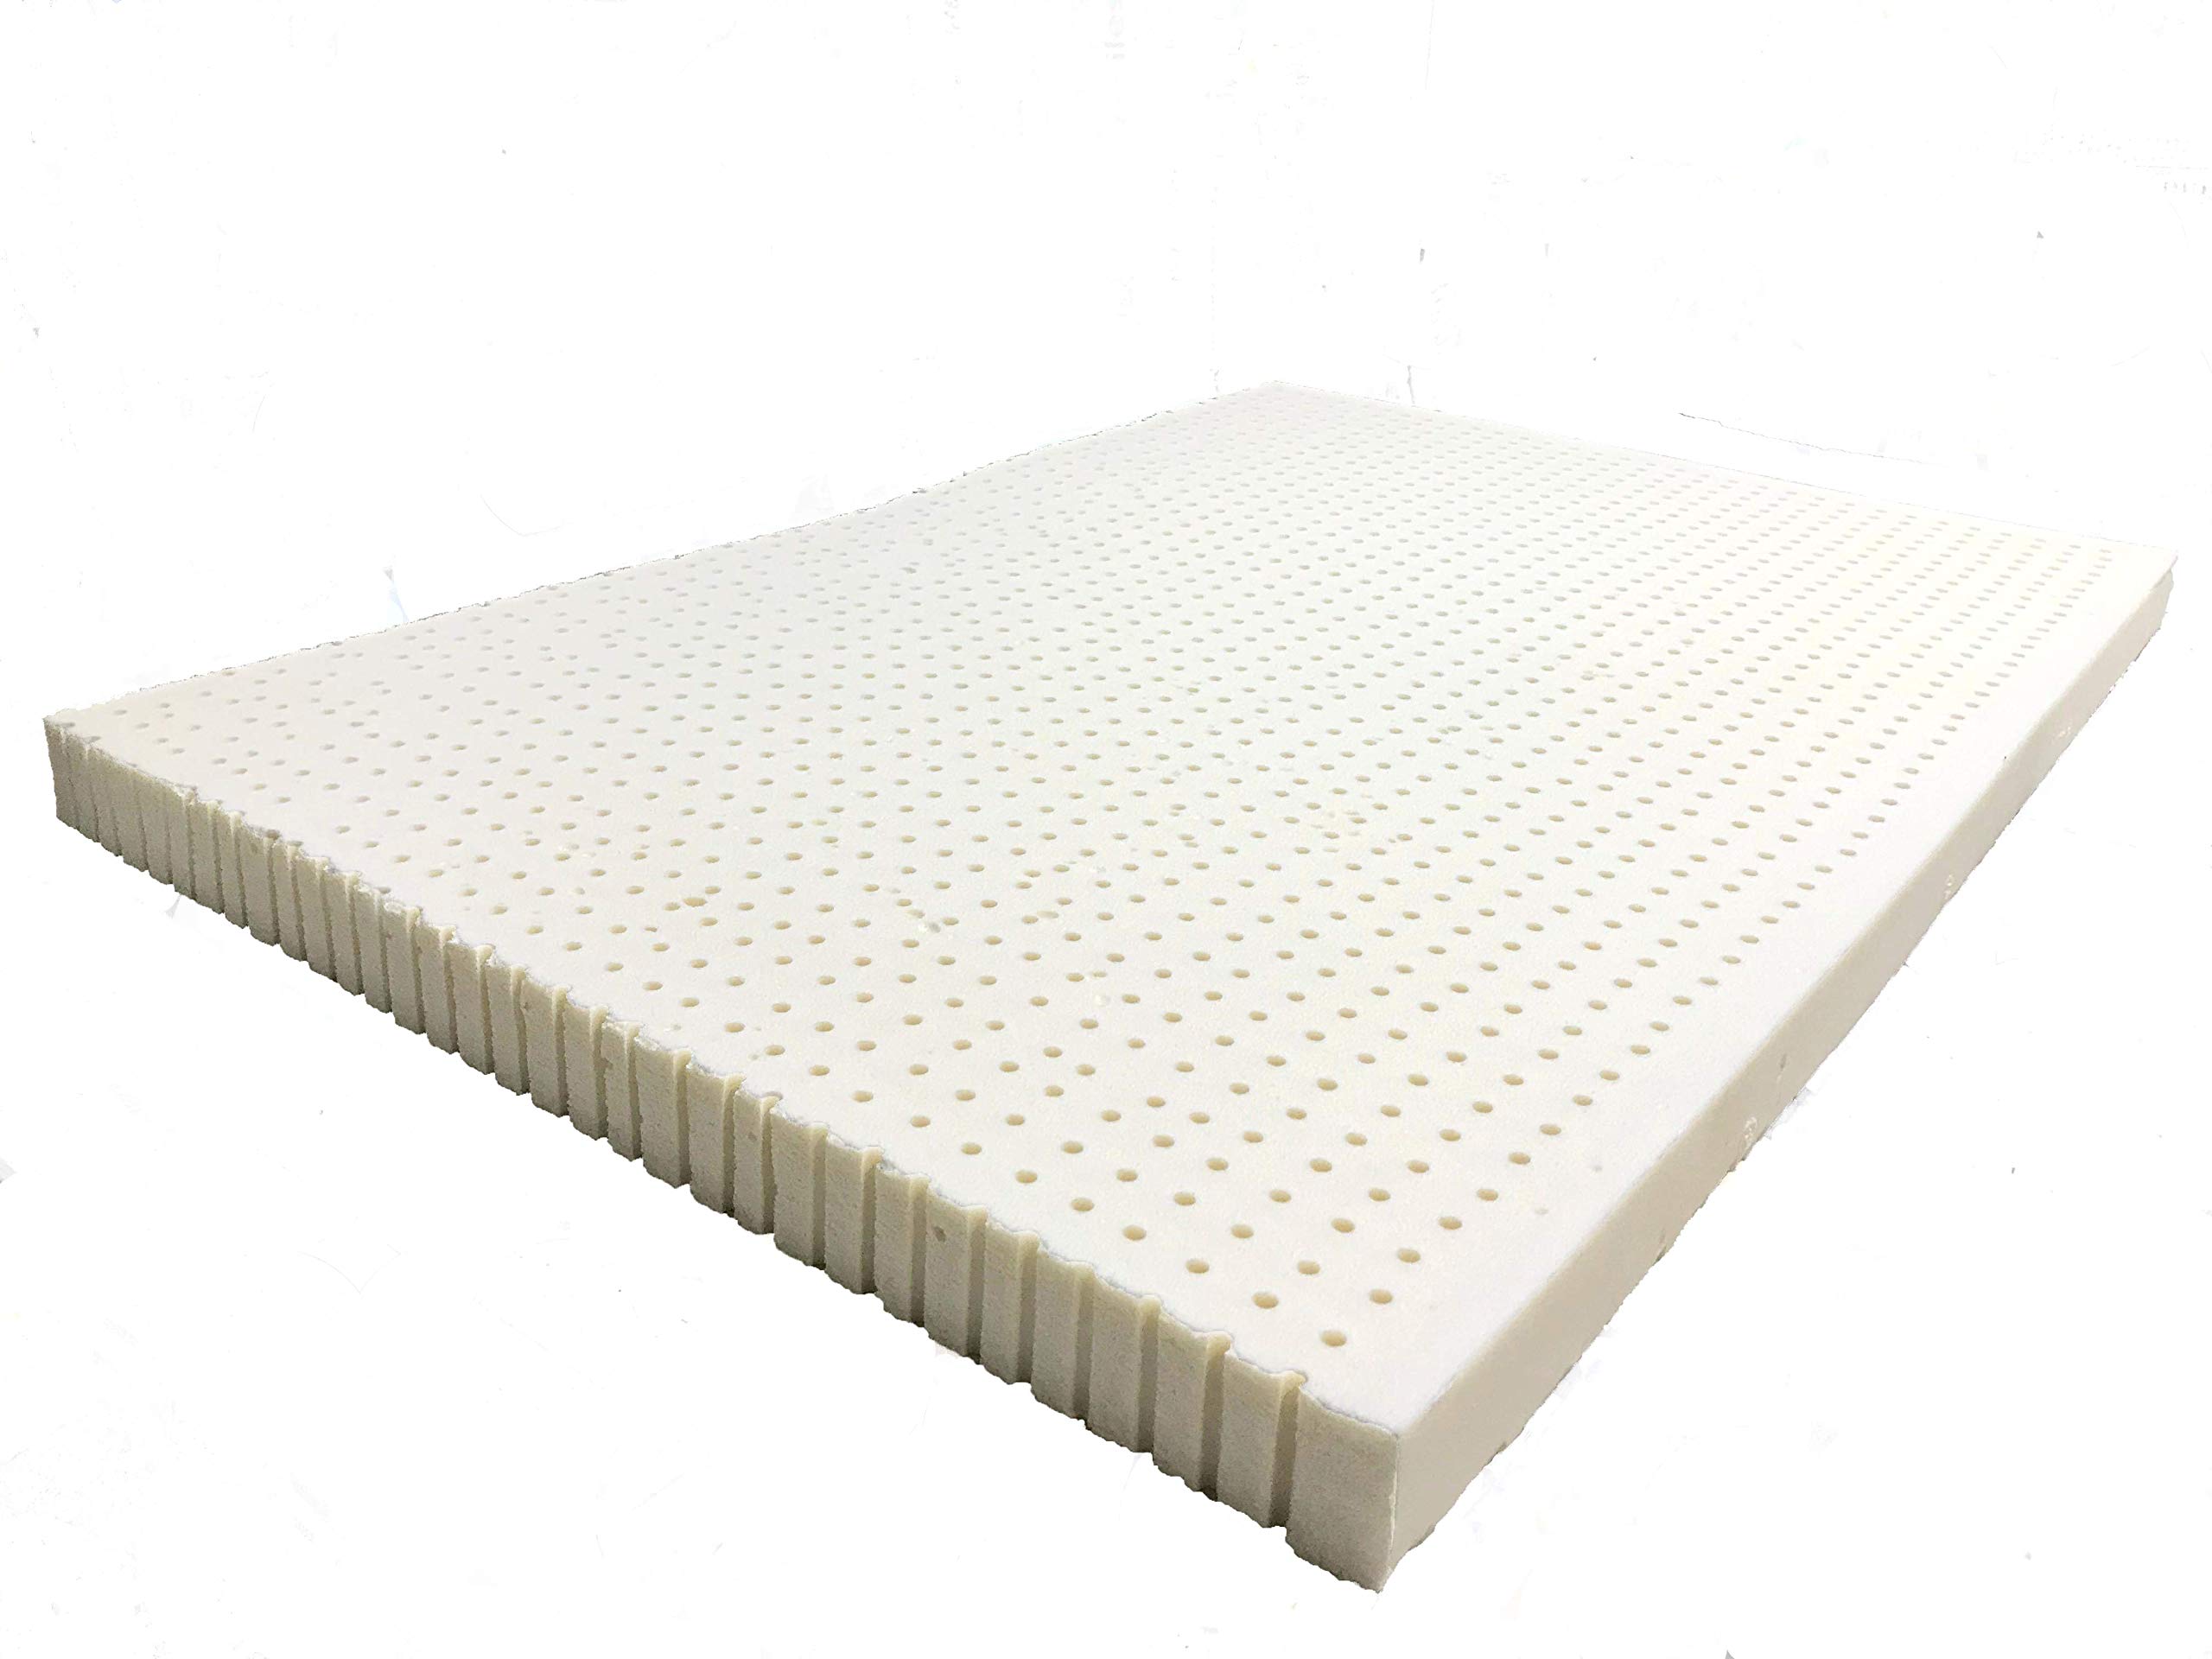 Organic Textiles Certified Organic Latex mattress Topper by Organic Textiles. Medium firmness, 2-inch thick. Queen size.